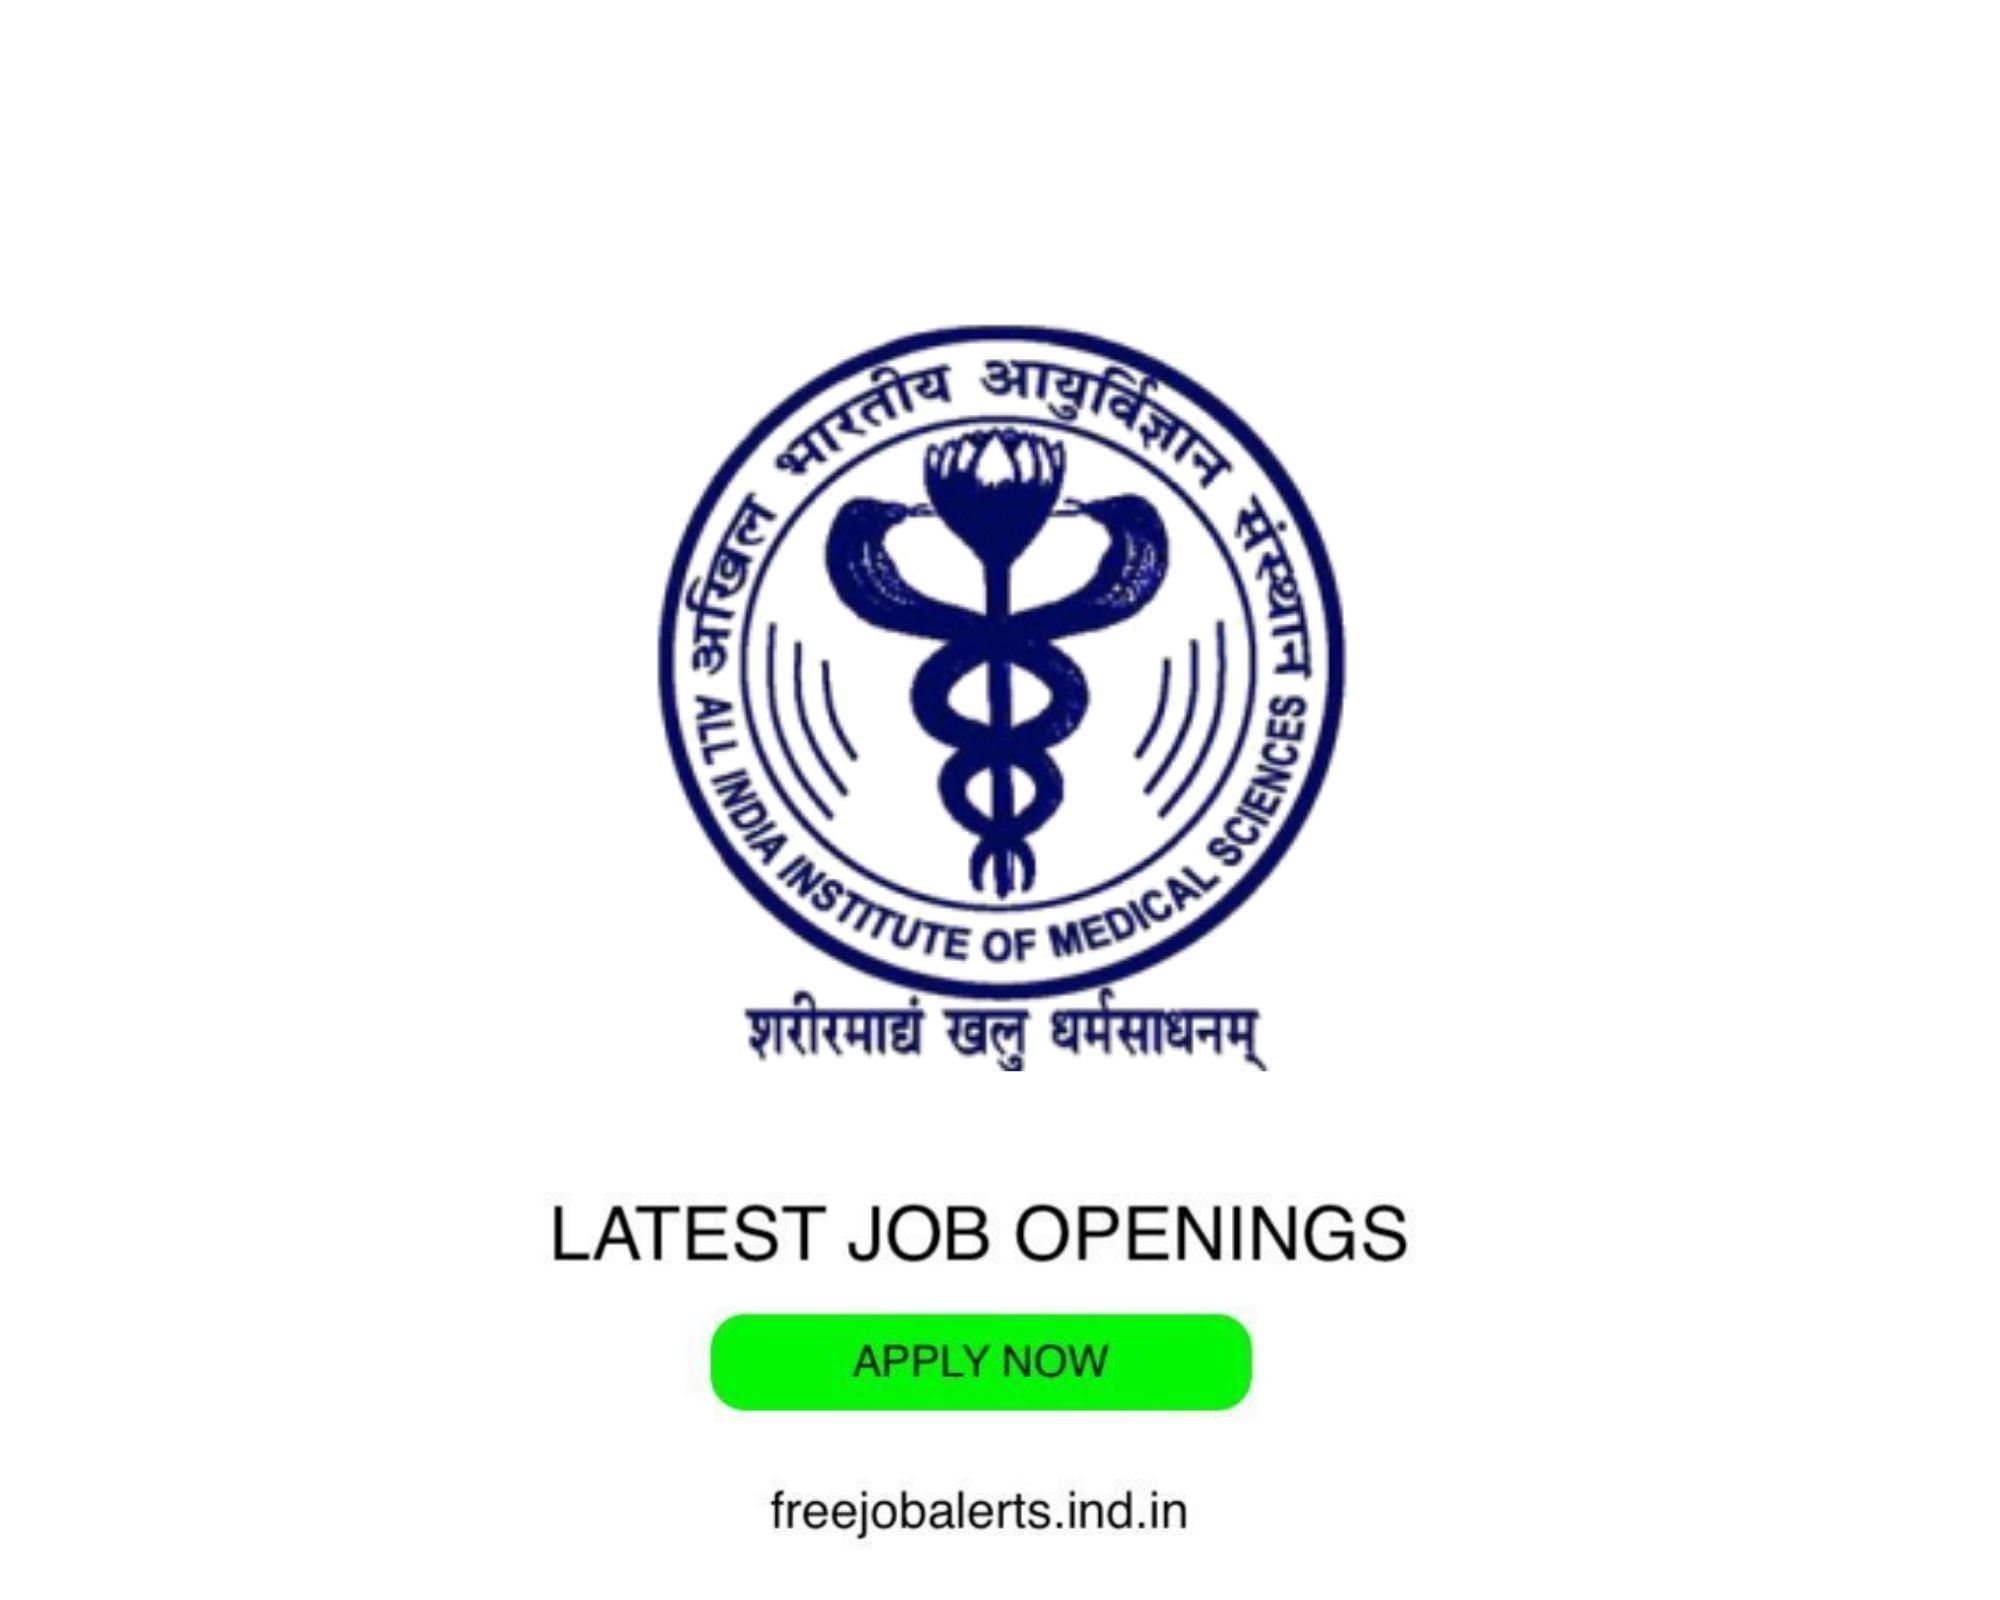 AIIMS- Latest Govt job openings - Free job alerts, Indian Govt Jobs